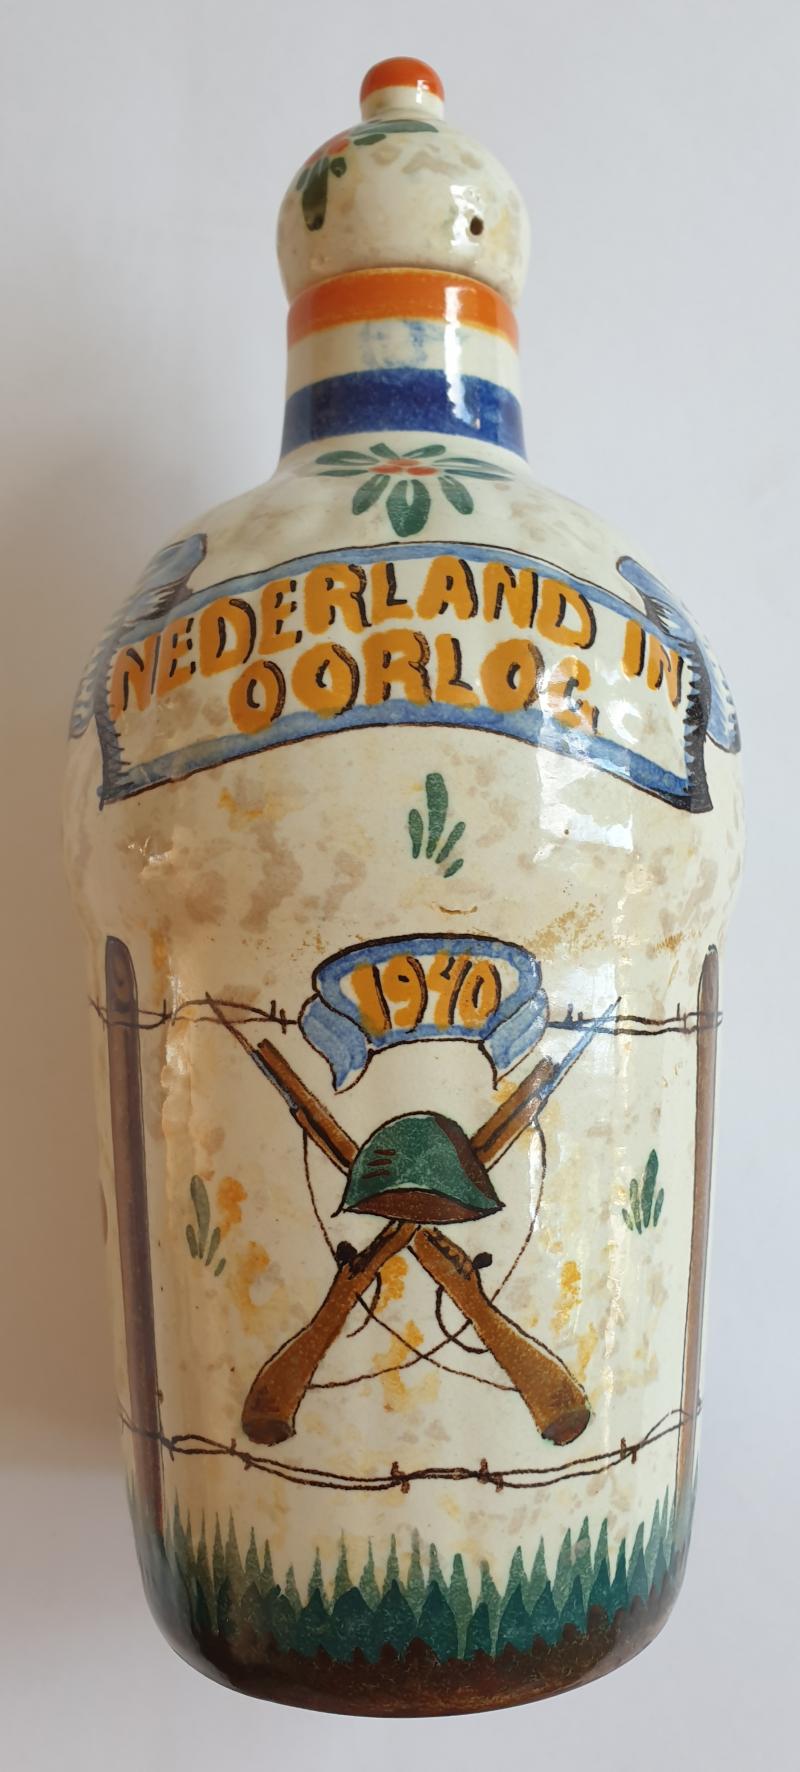 Mobilisatie jeneverkruik - 1939 - J.G. Kooymans & Zn, 's Hertogenbosch   -   Mobilization gin jar - 1939 - J.G. Kooymans & Zn, 's-Hertogenbosch